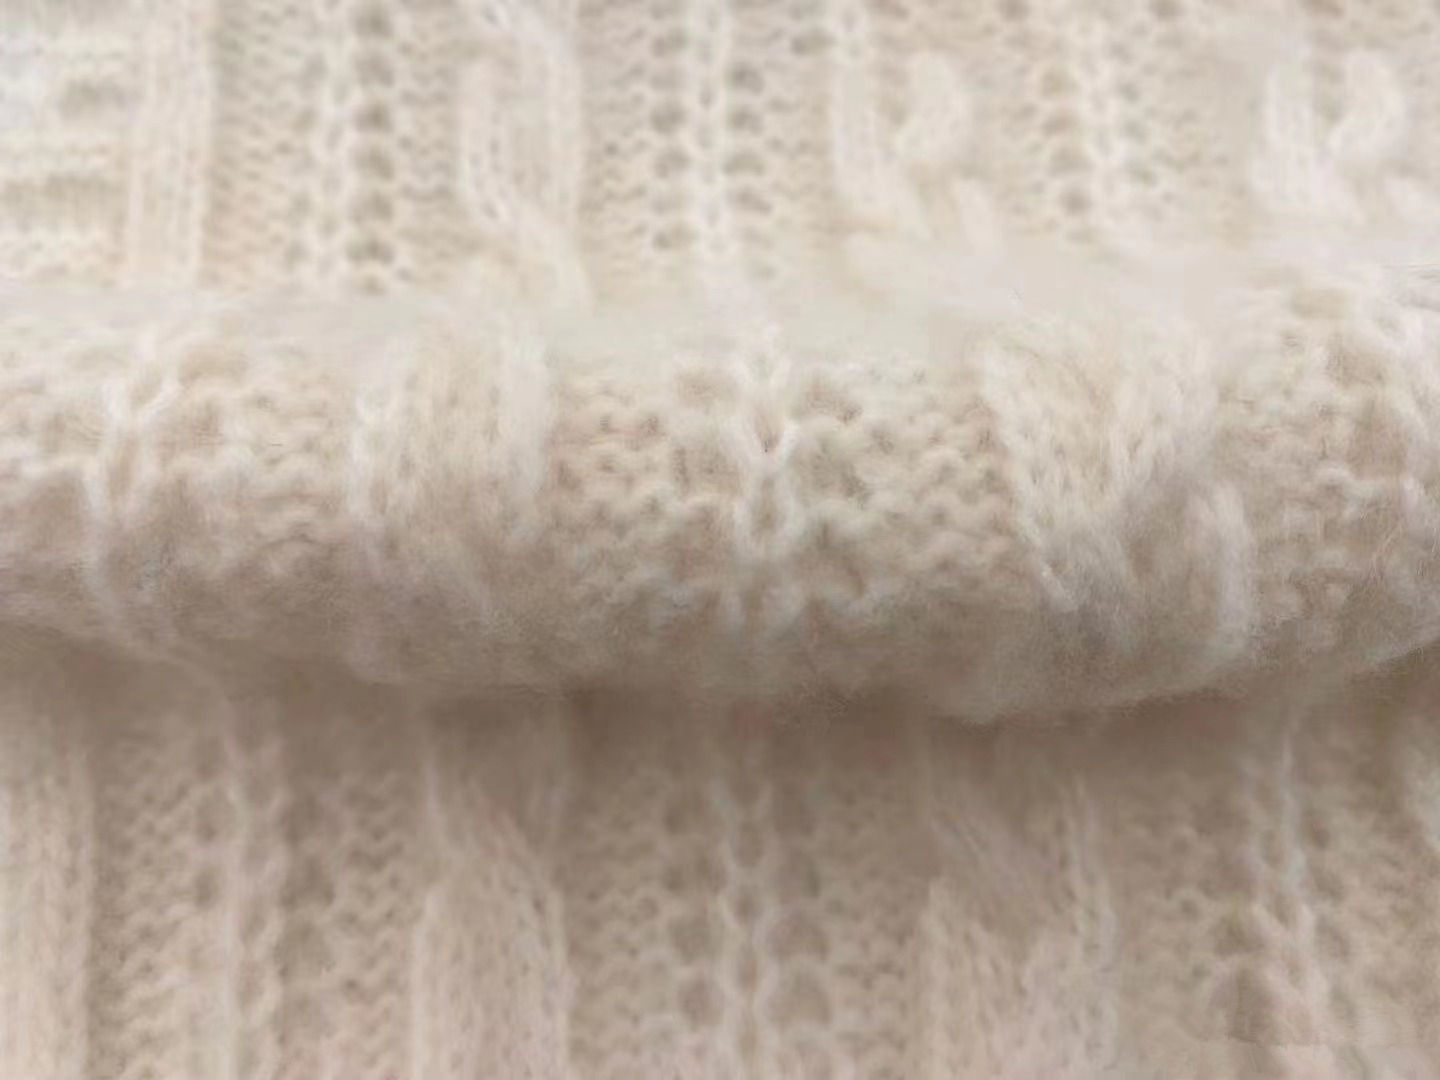 बहु रंग Crochet इंद्रधनुष यार्न बुनाई के लिए 5.5NM फैंसी यार्न - 1 